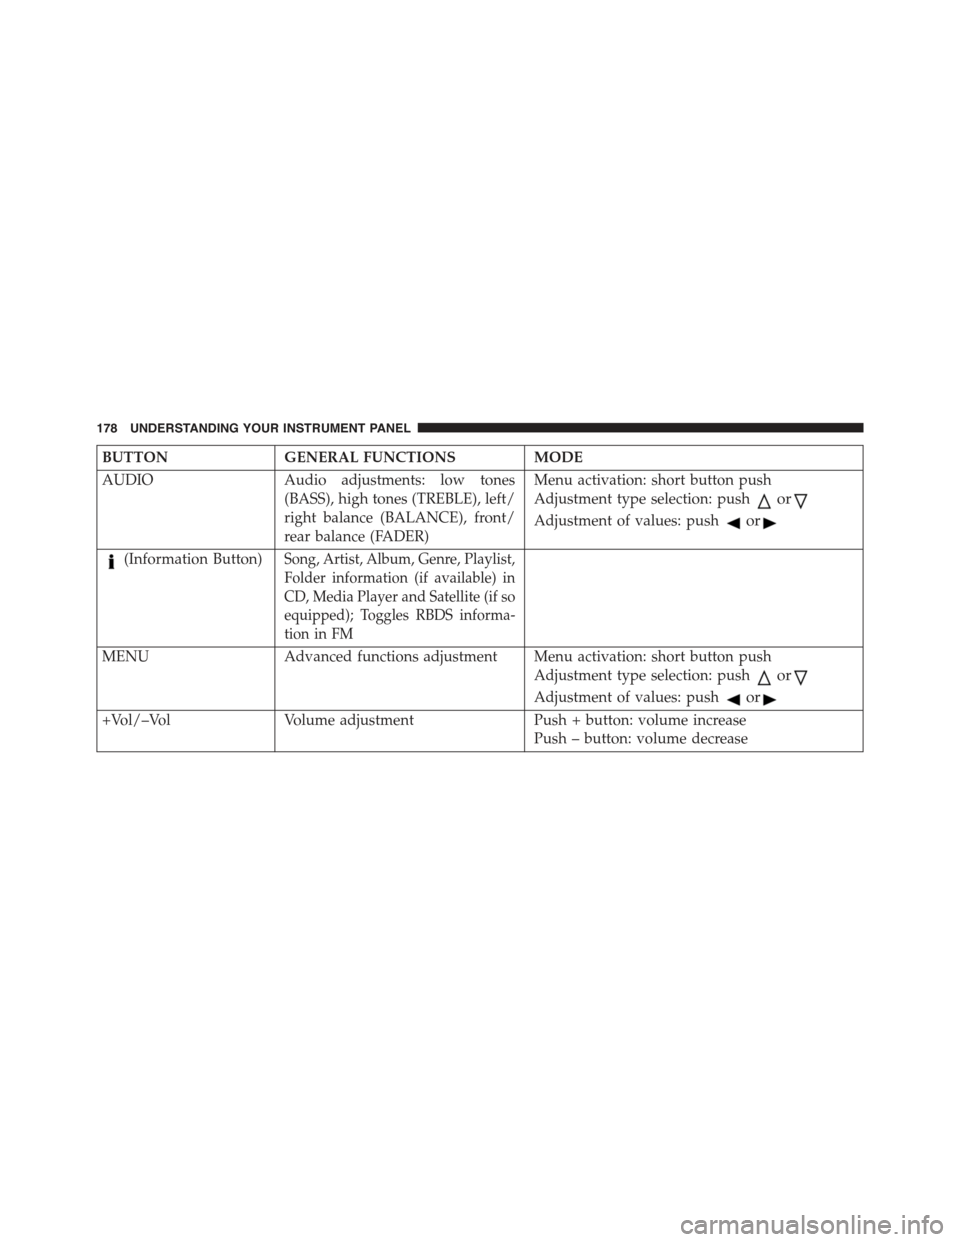 FIAT 500E 2015 2.G Owners Manual BUTTONGENERAL FUNCTIONSMODE
AUDIOAudio adjustments: low tones
(BASS), high tones (TREBLE), left/
right balance (BALANCE), front/
rear balance (FADER)
Menu activation: short button push
Adjustment type